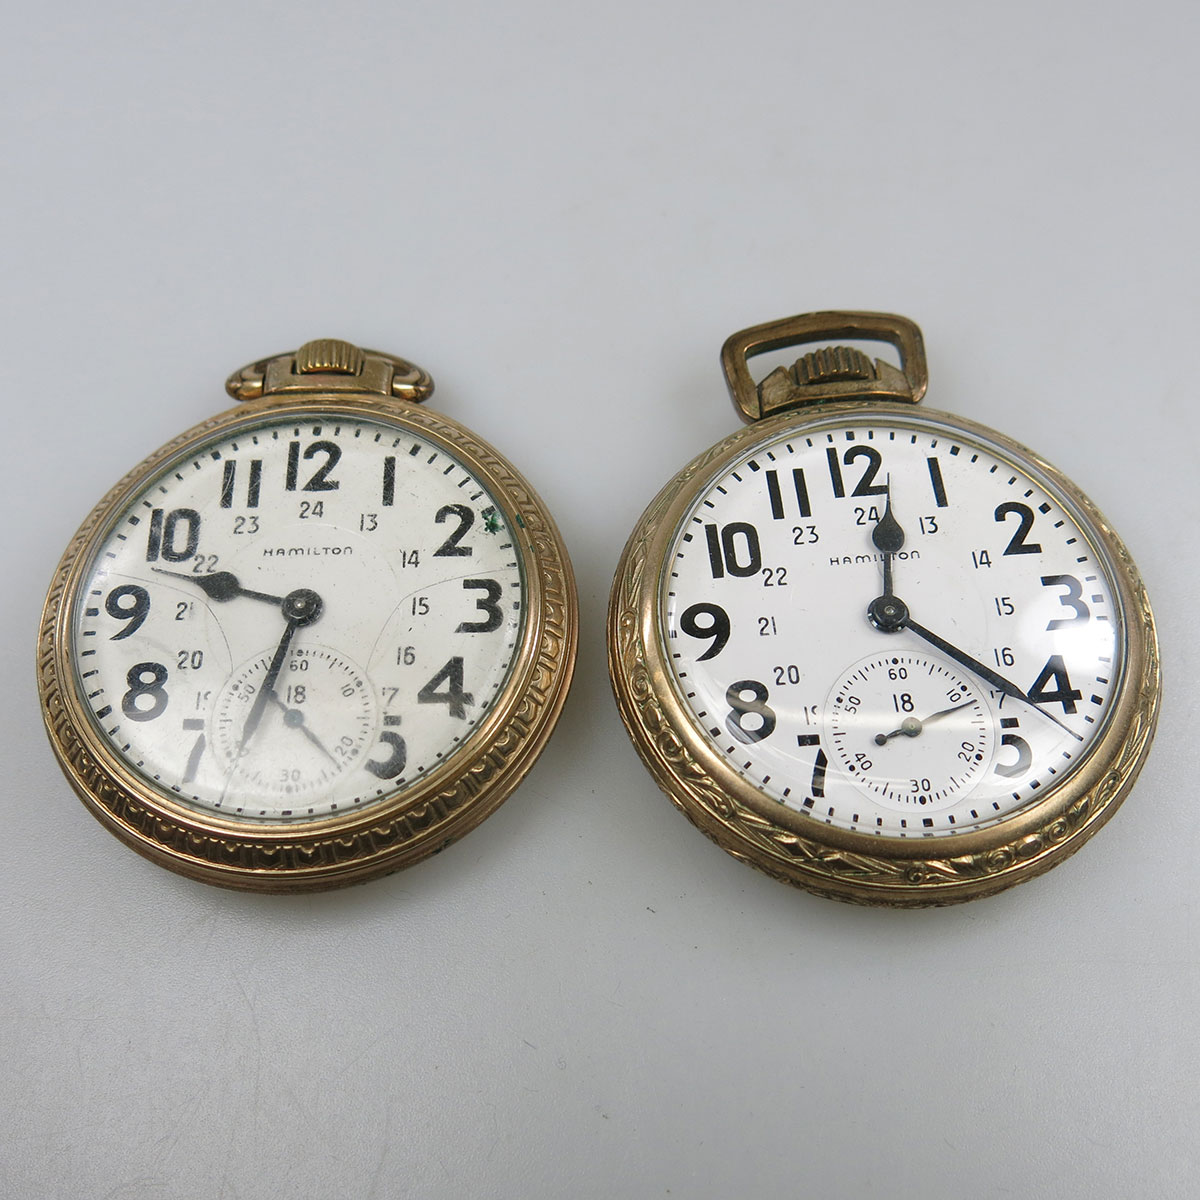 2 Hamilton Railroad Grade Pocket Watches